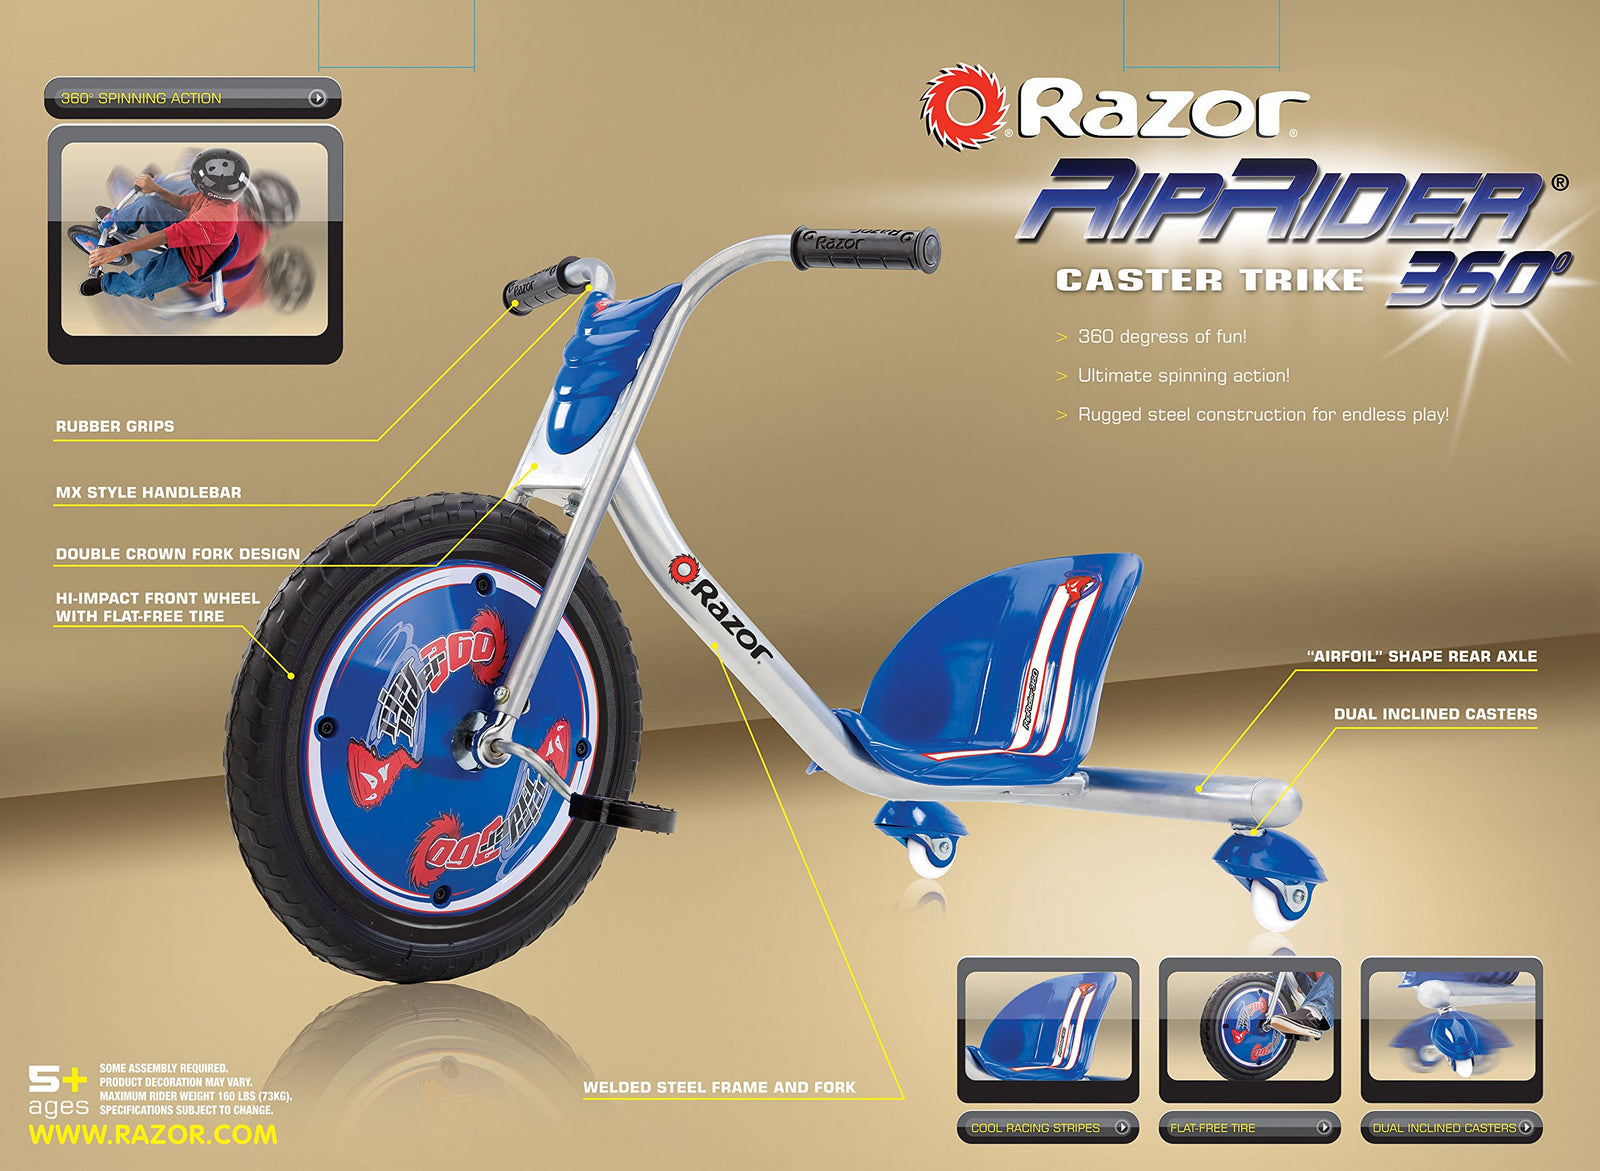 Razor 360 Caster Trike